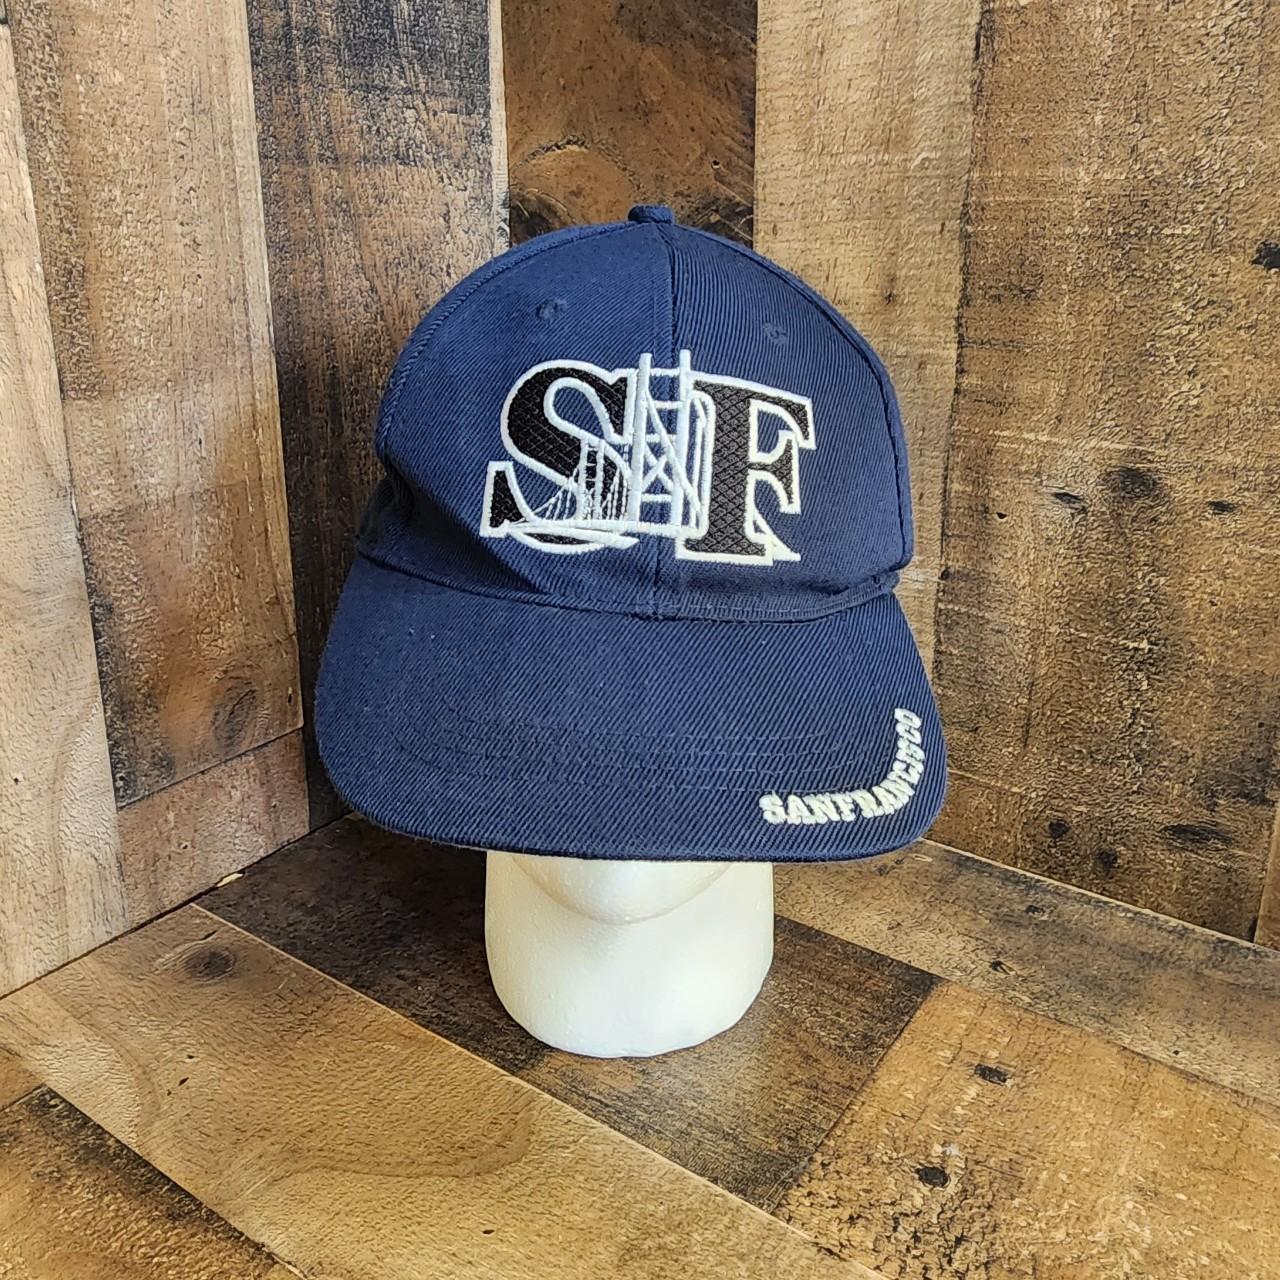 49ers blue hat